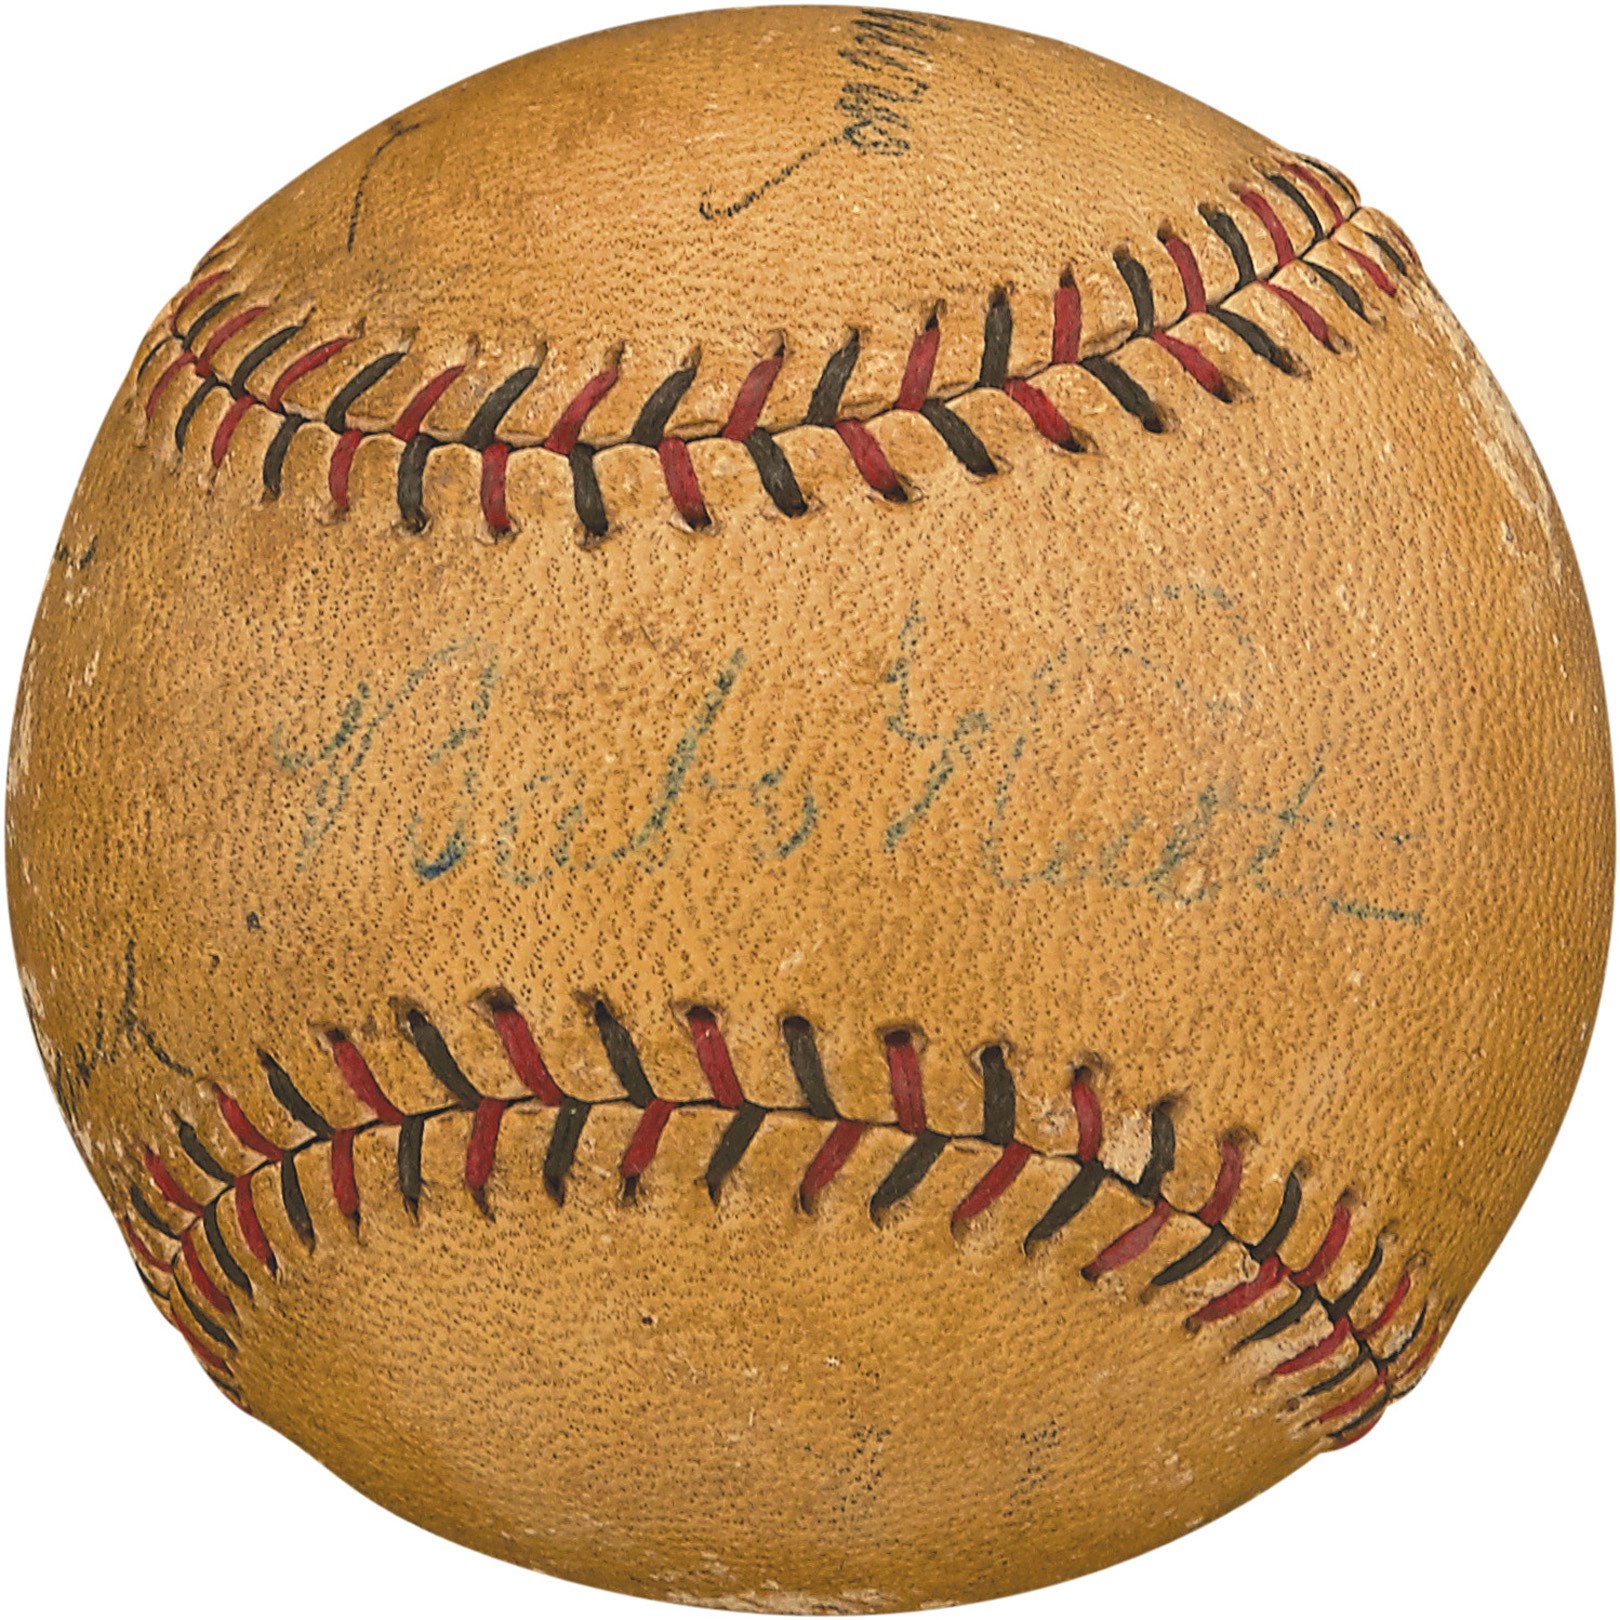 - Babe Ruth Multi Signed 1930 World Series Game Used Baseball - Direct Family Provenance (PSA)